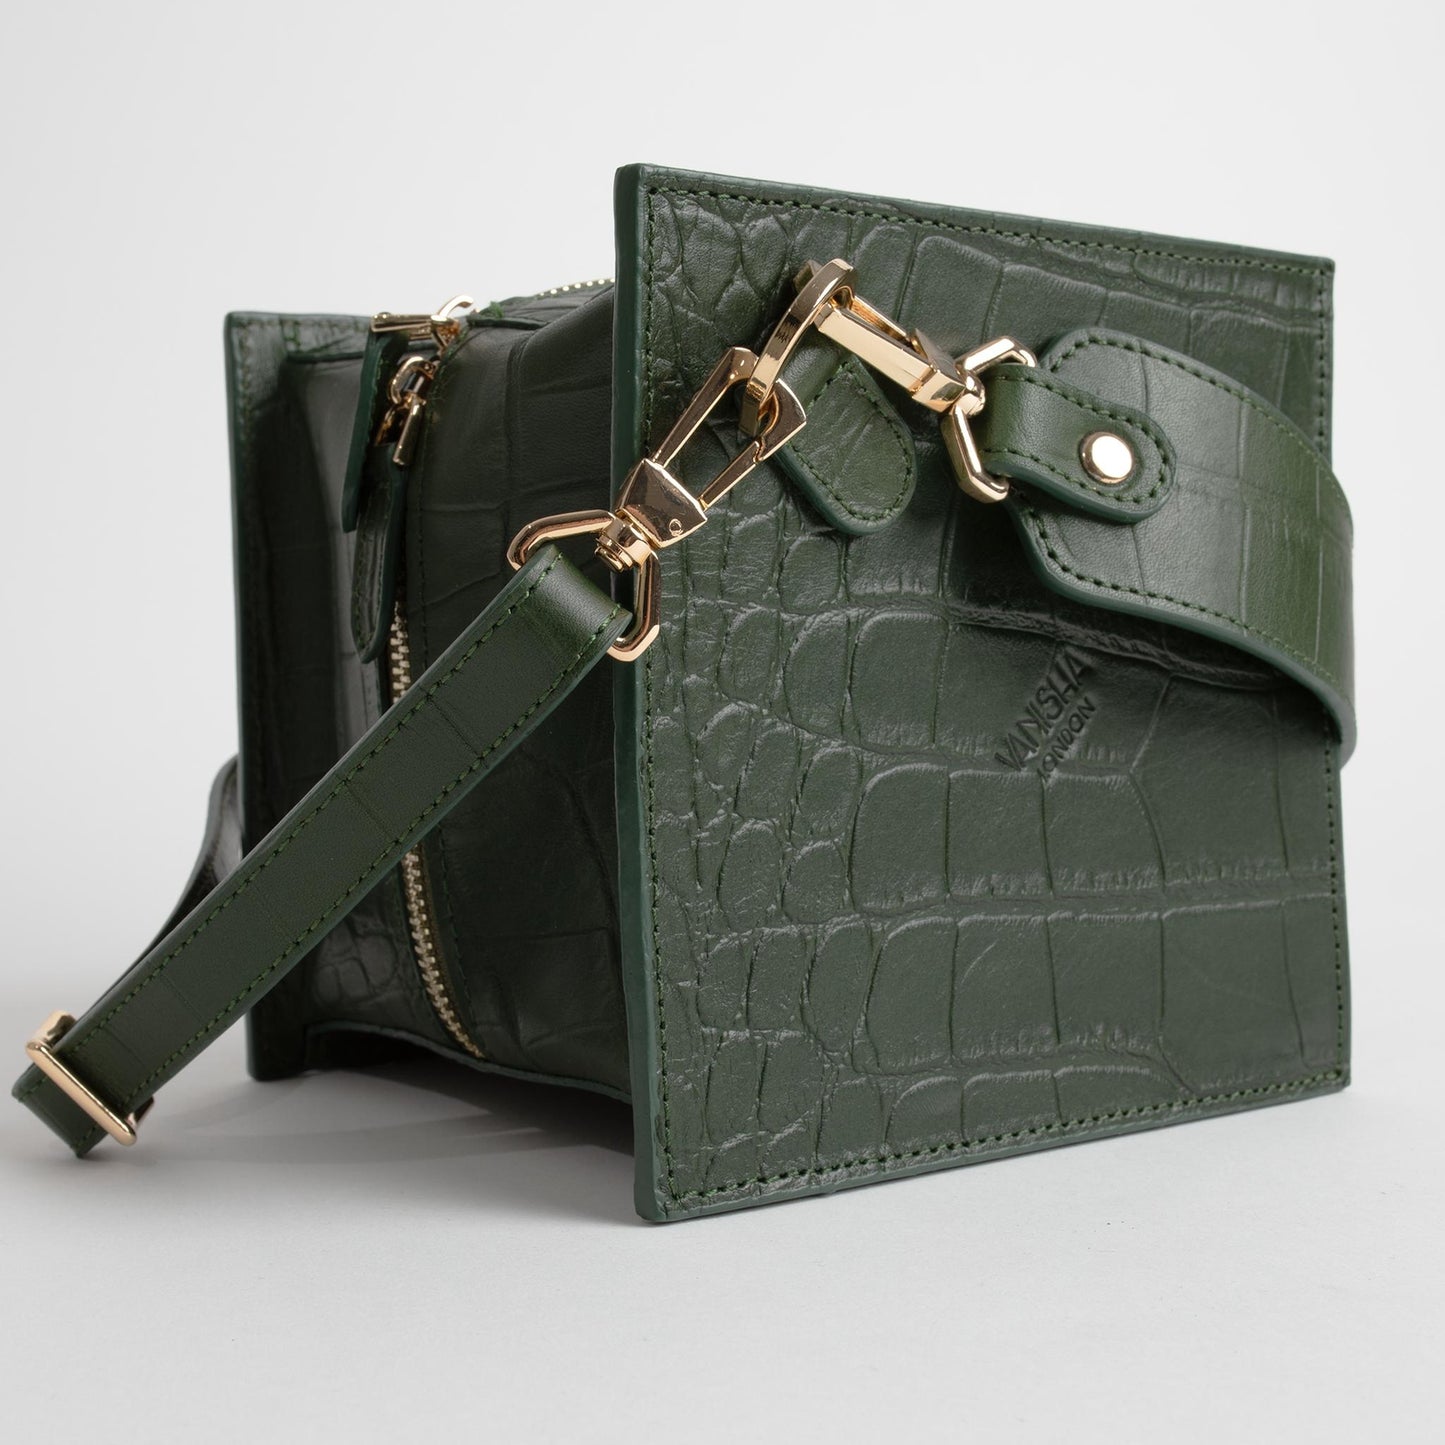 Lola bag in pine green crocodile print-2